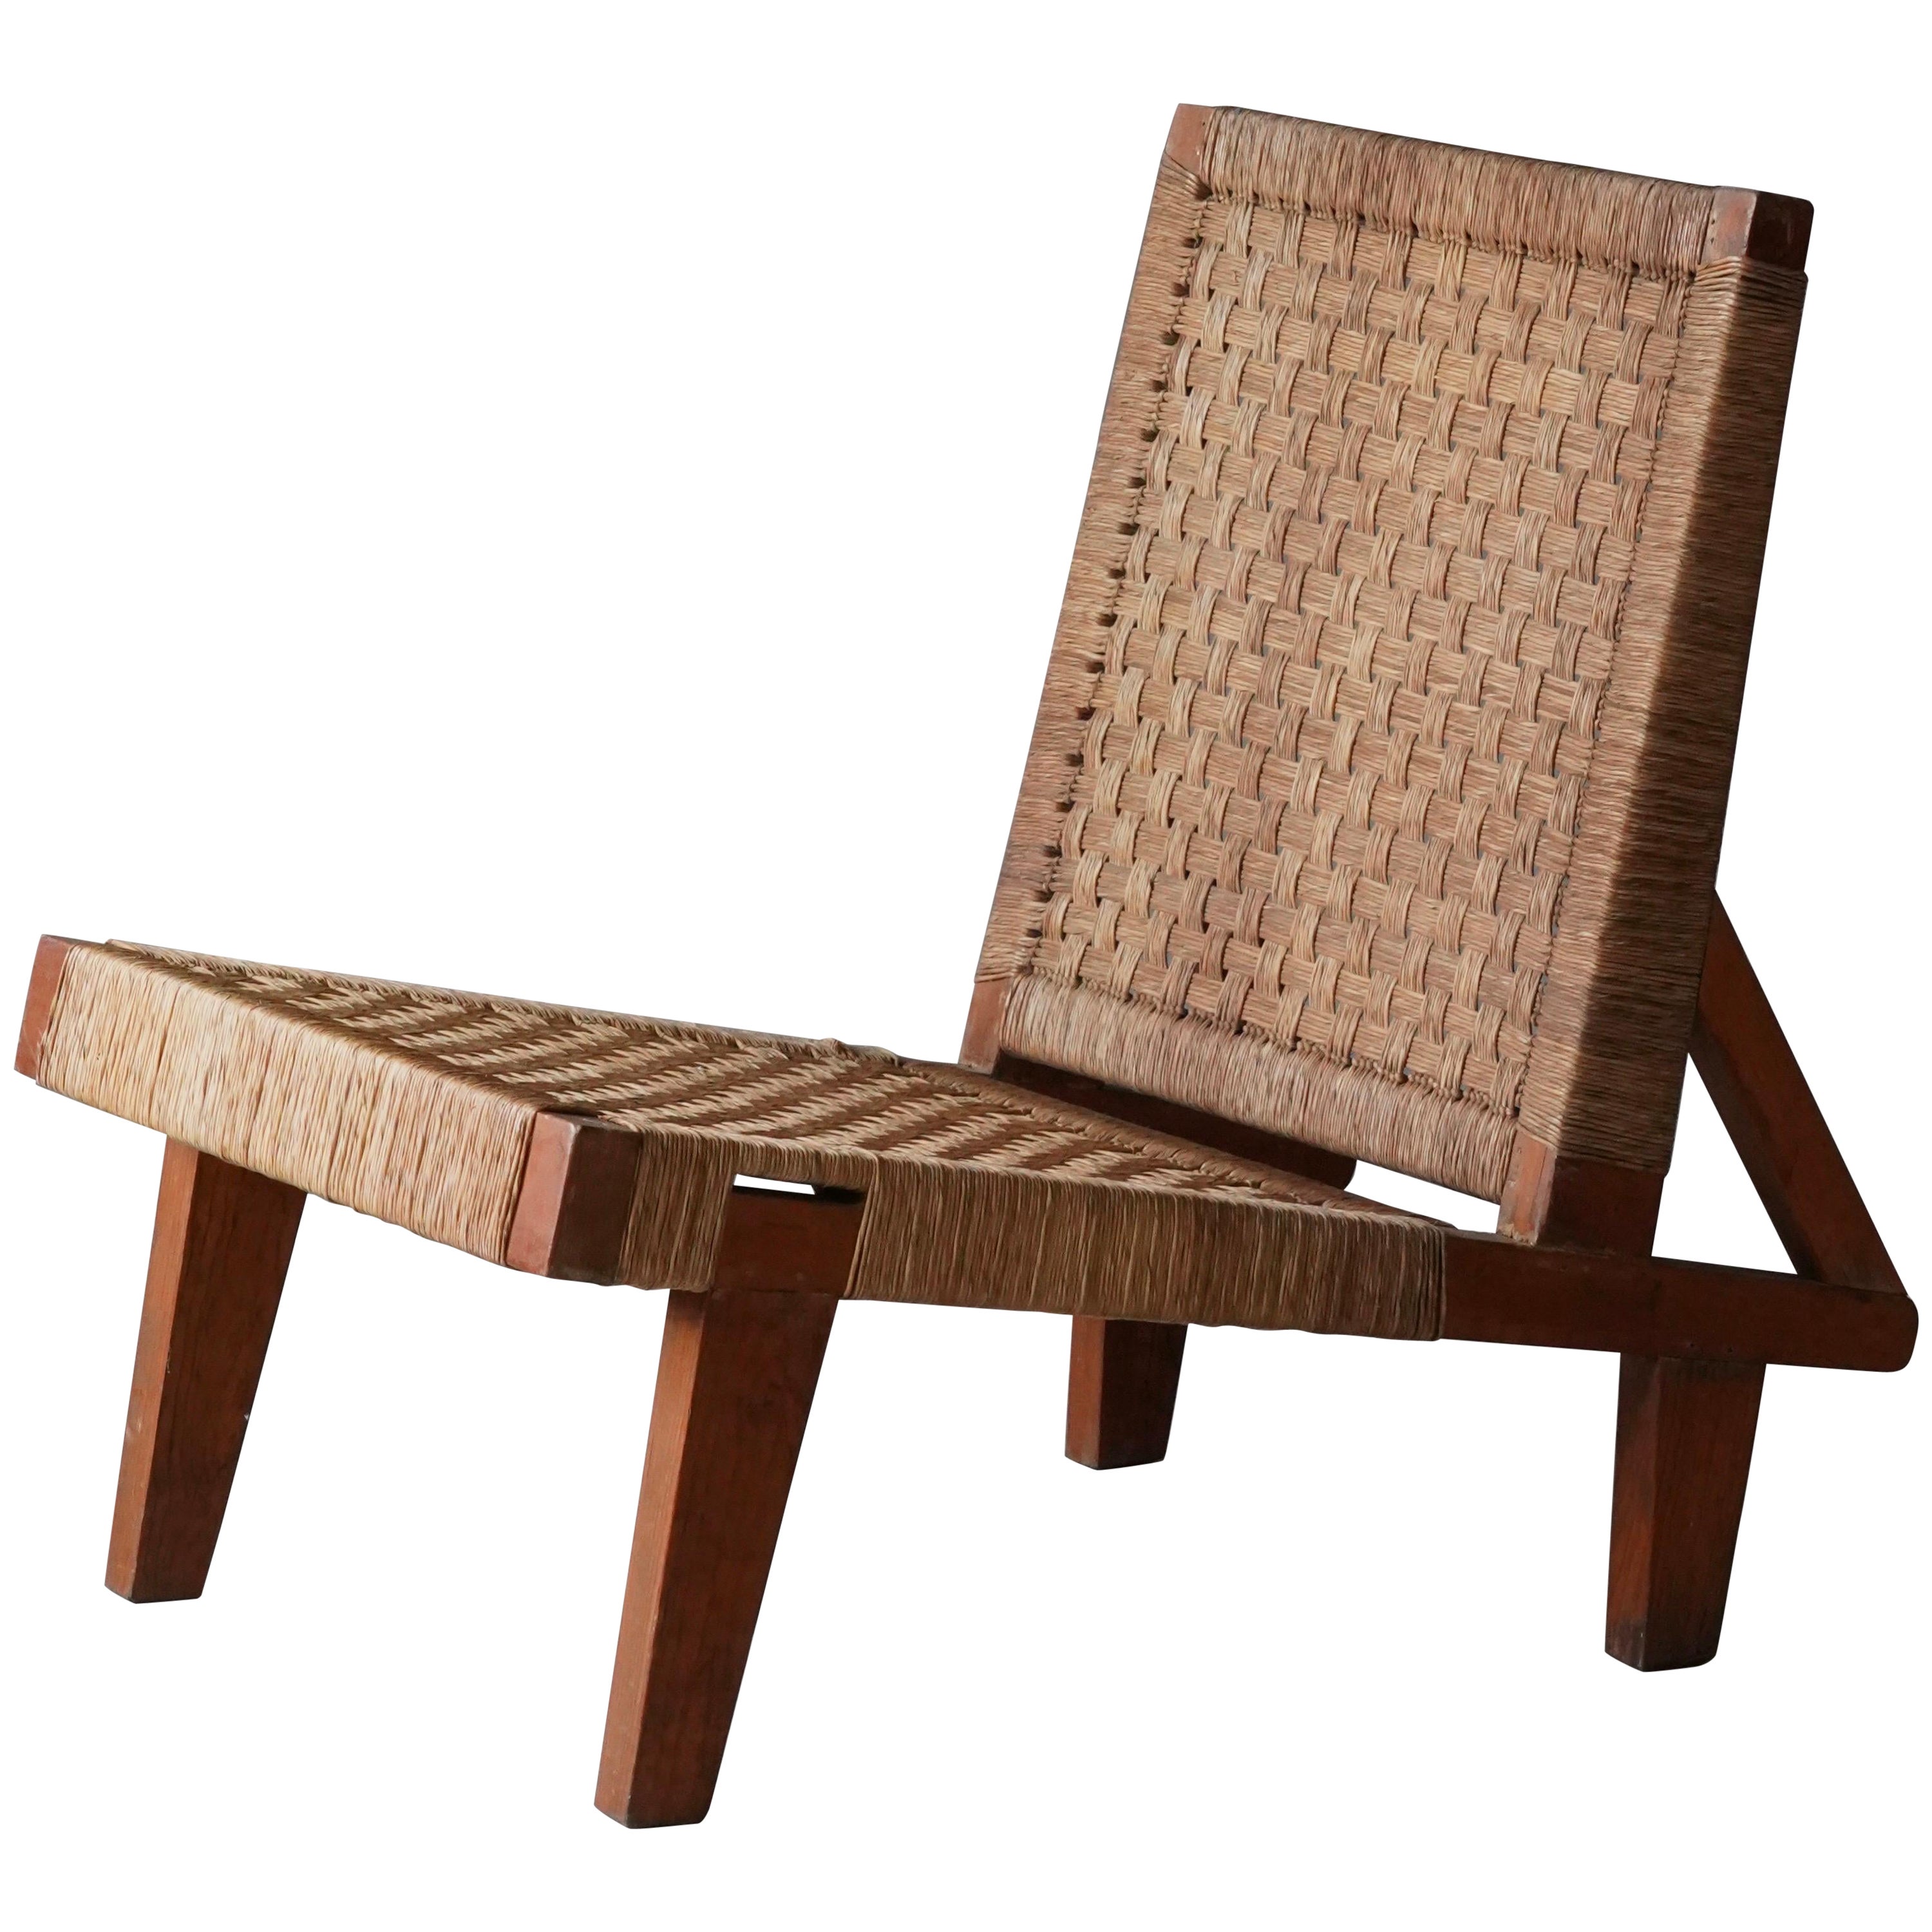 American, Lounge / Slipper Chair, Woven Rattan, Walnut, United States, 1950s